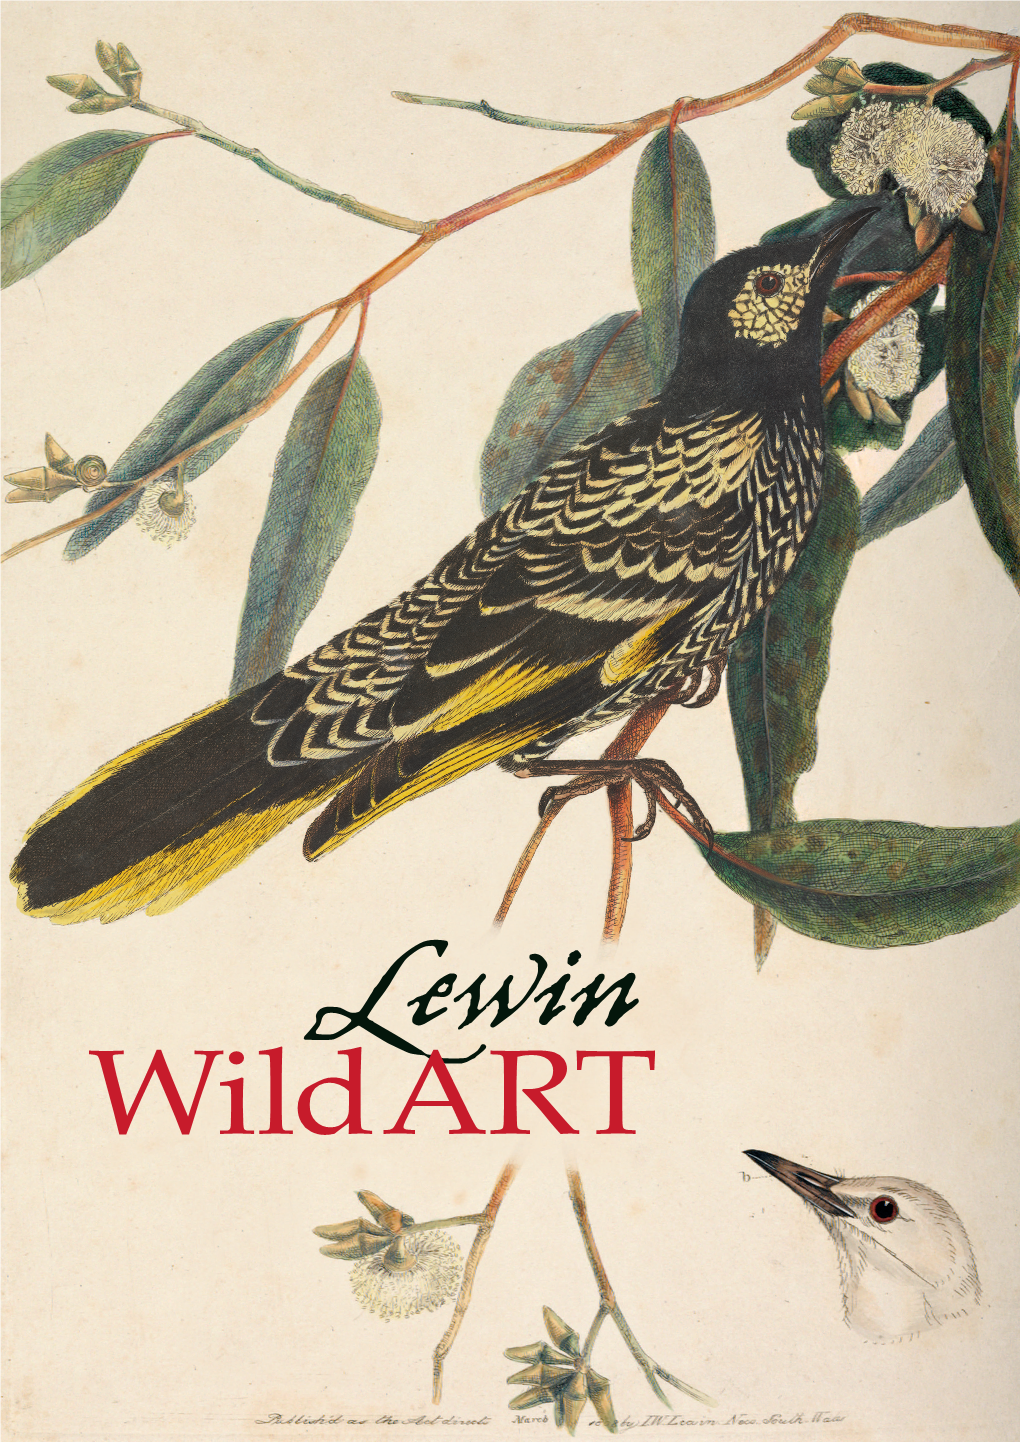 Lewin Wild Art Exhibition Guide